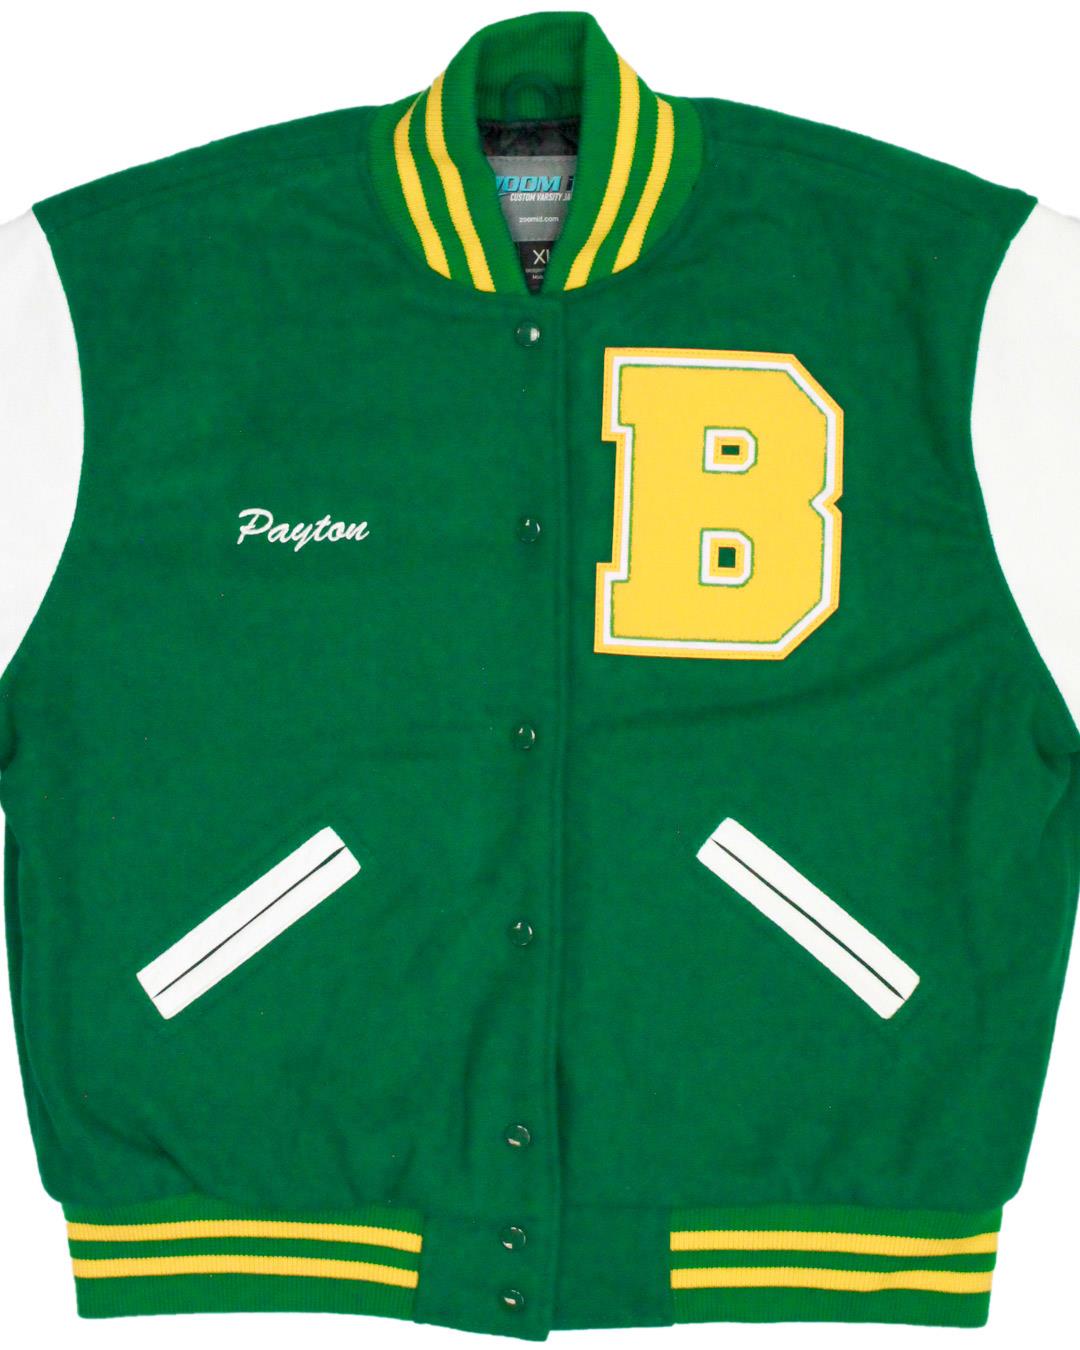 Bethel High School Bruins Letterman Jacket, Hampton, VA -  Front